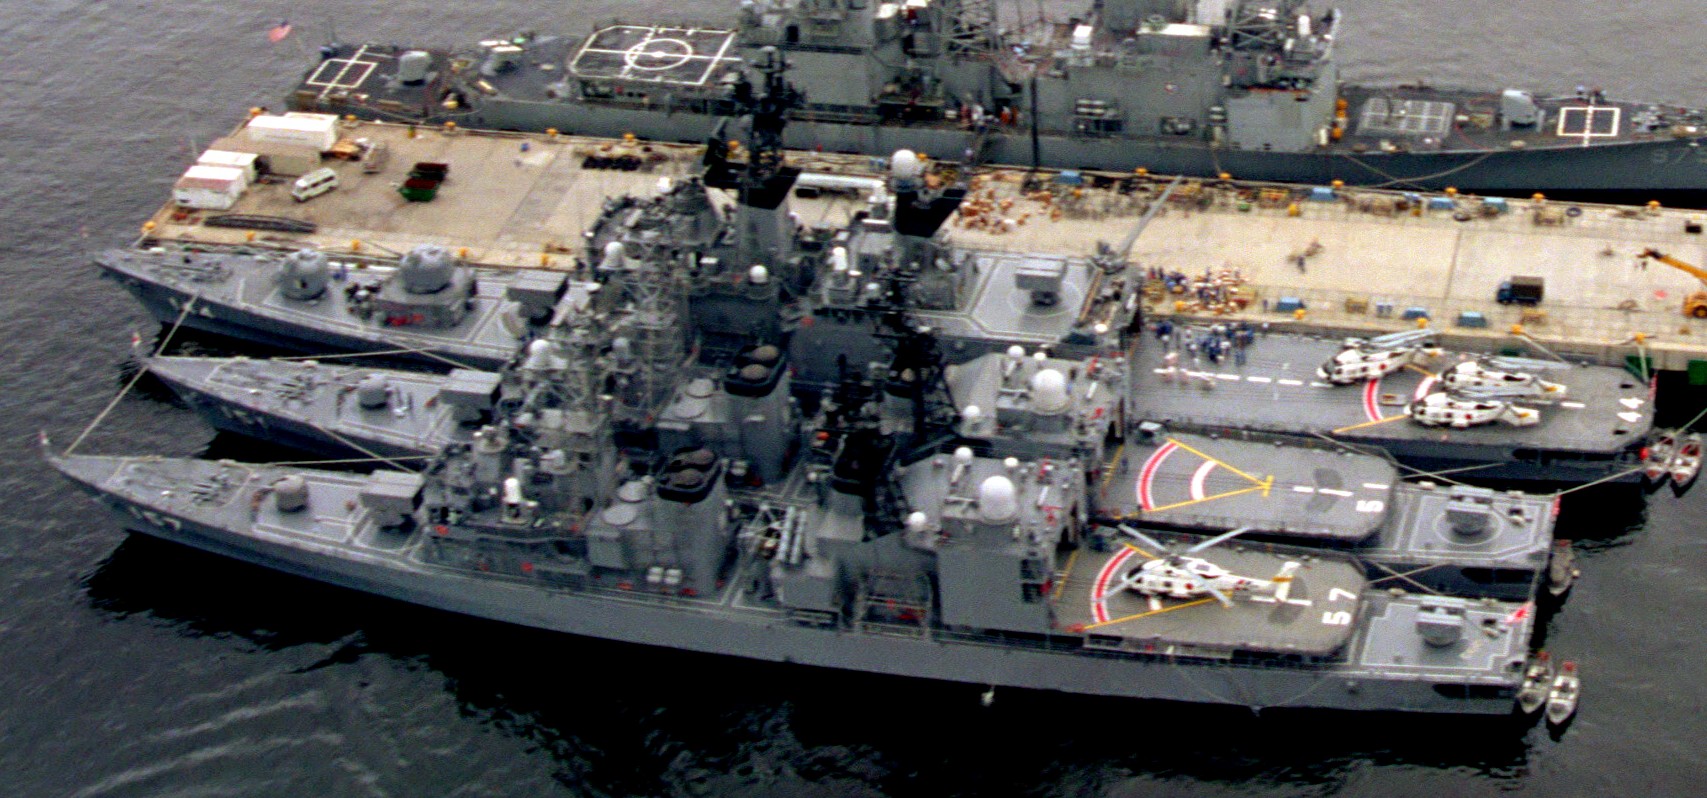 dd-151 js asagiri class destroyer あさぎり japan maritime self defense force jmsdf 15